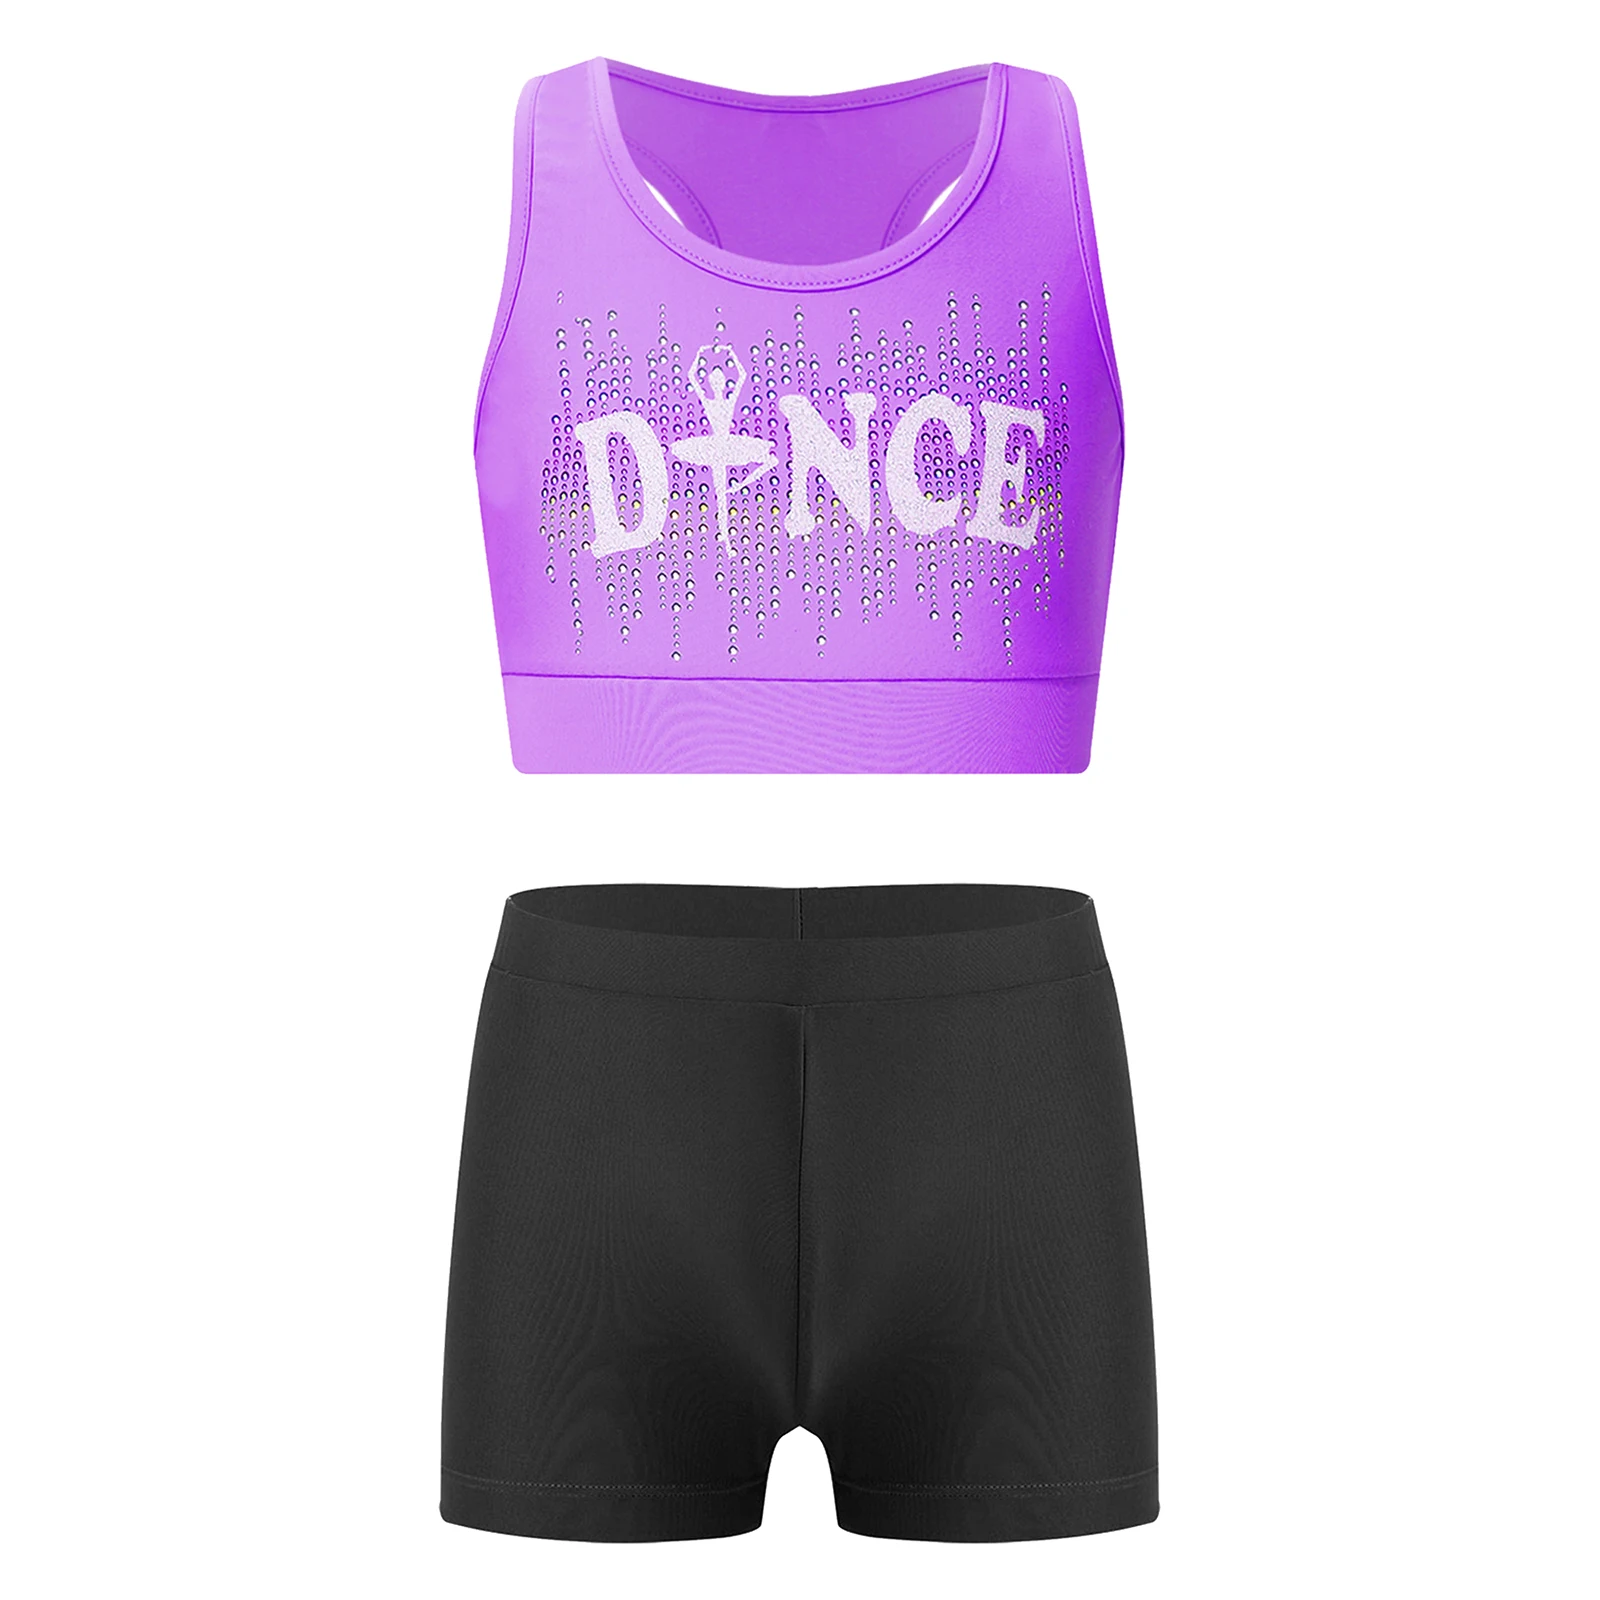 

Kids Girls Sports Gymnastics Ballet Dance Outfit Sleeveless Racerback Crop Top with Shorts Workout Dancewear Sportswear Swimwear